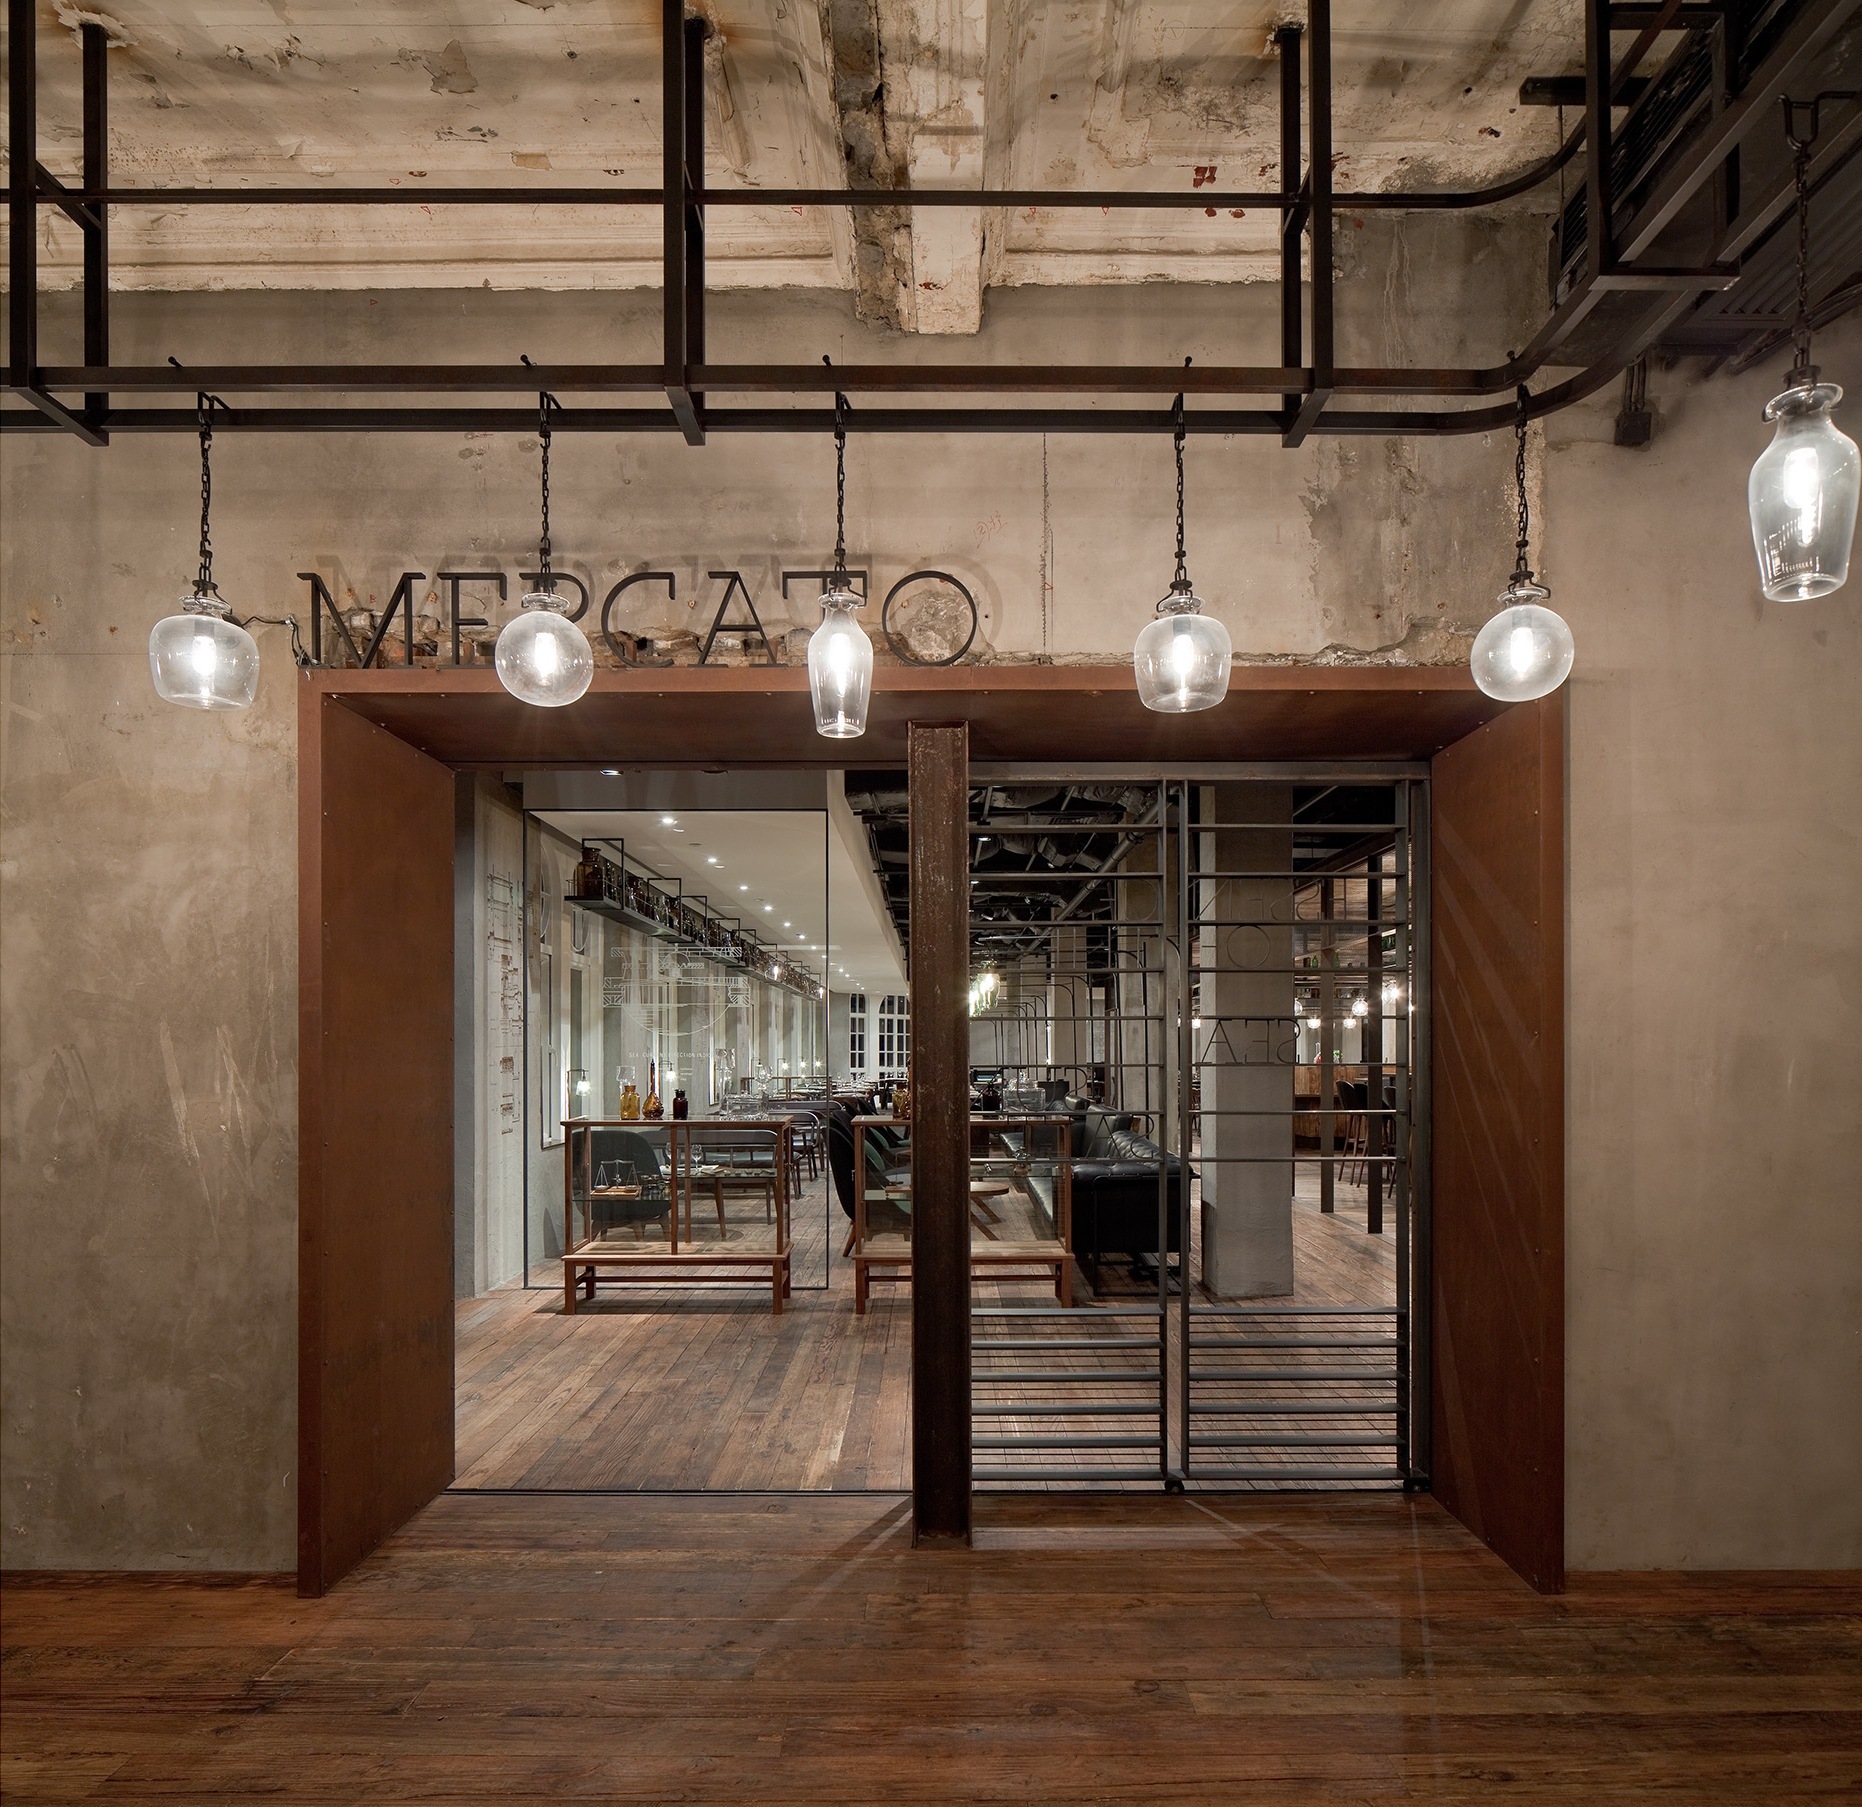 Mercato / Neri & Hu Design and Reserch Office